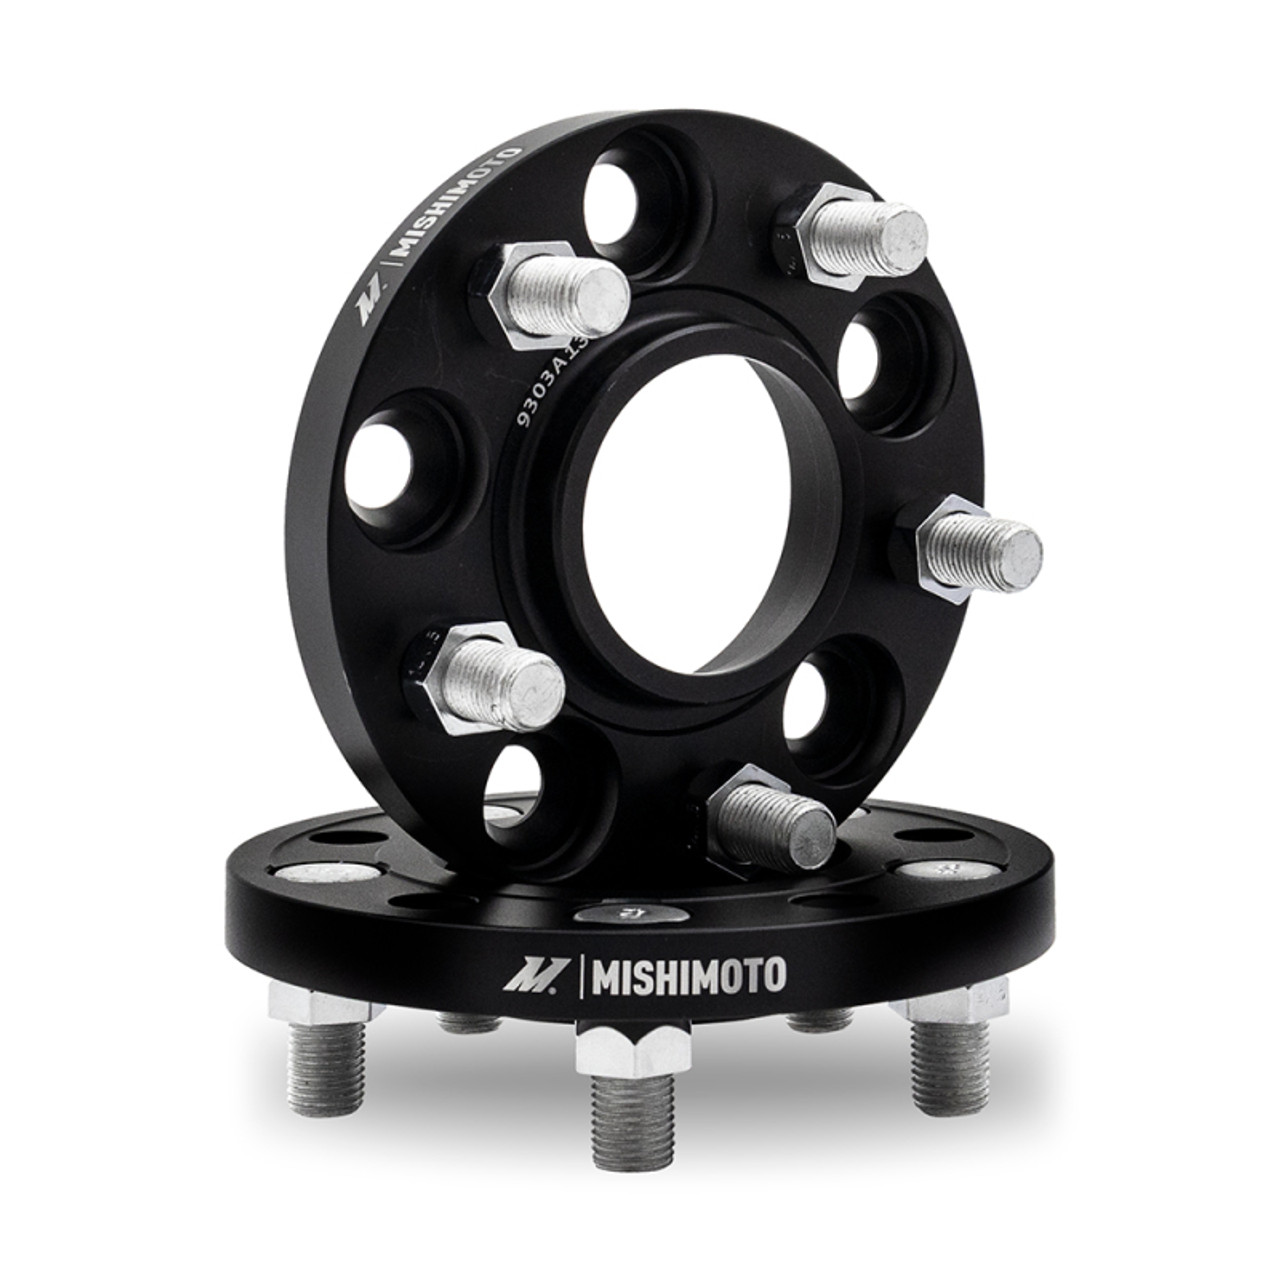 Mishimoto Wheel Spacers - 5x114.3 - 66.1 - 25 - M12 - Black - MMWS-007-250BK Photo - Primary